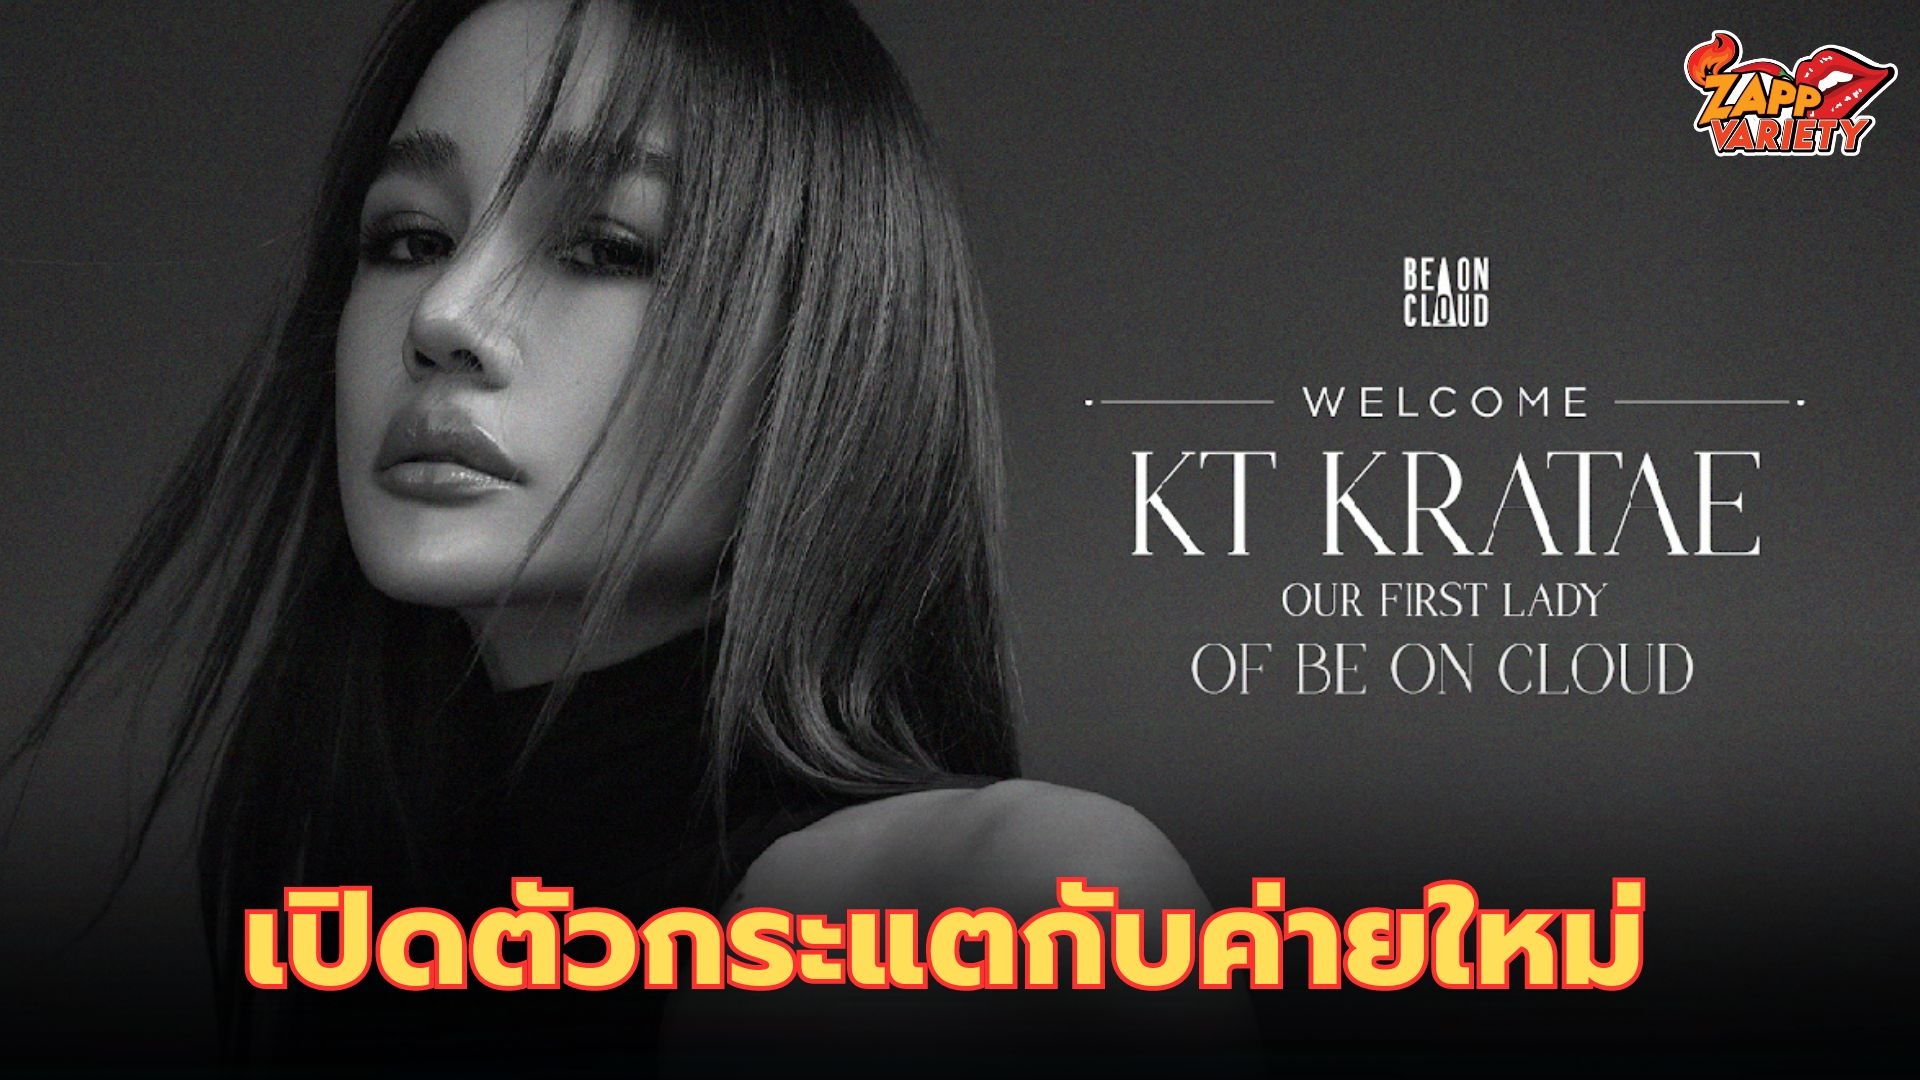 BE ON CLOUD เล่นใหญ่ ! เปิดตัวศิลปินหญิงคนแรกของค่าย KT Kratae (เคที กระแต) ด้วยโชว์สุดอลัง พร้อมมุ่งสู่ระดับโลก